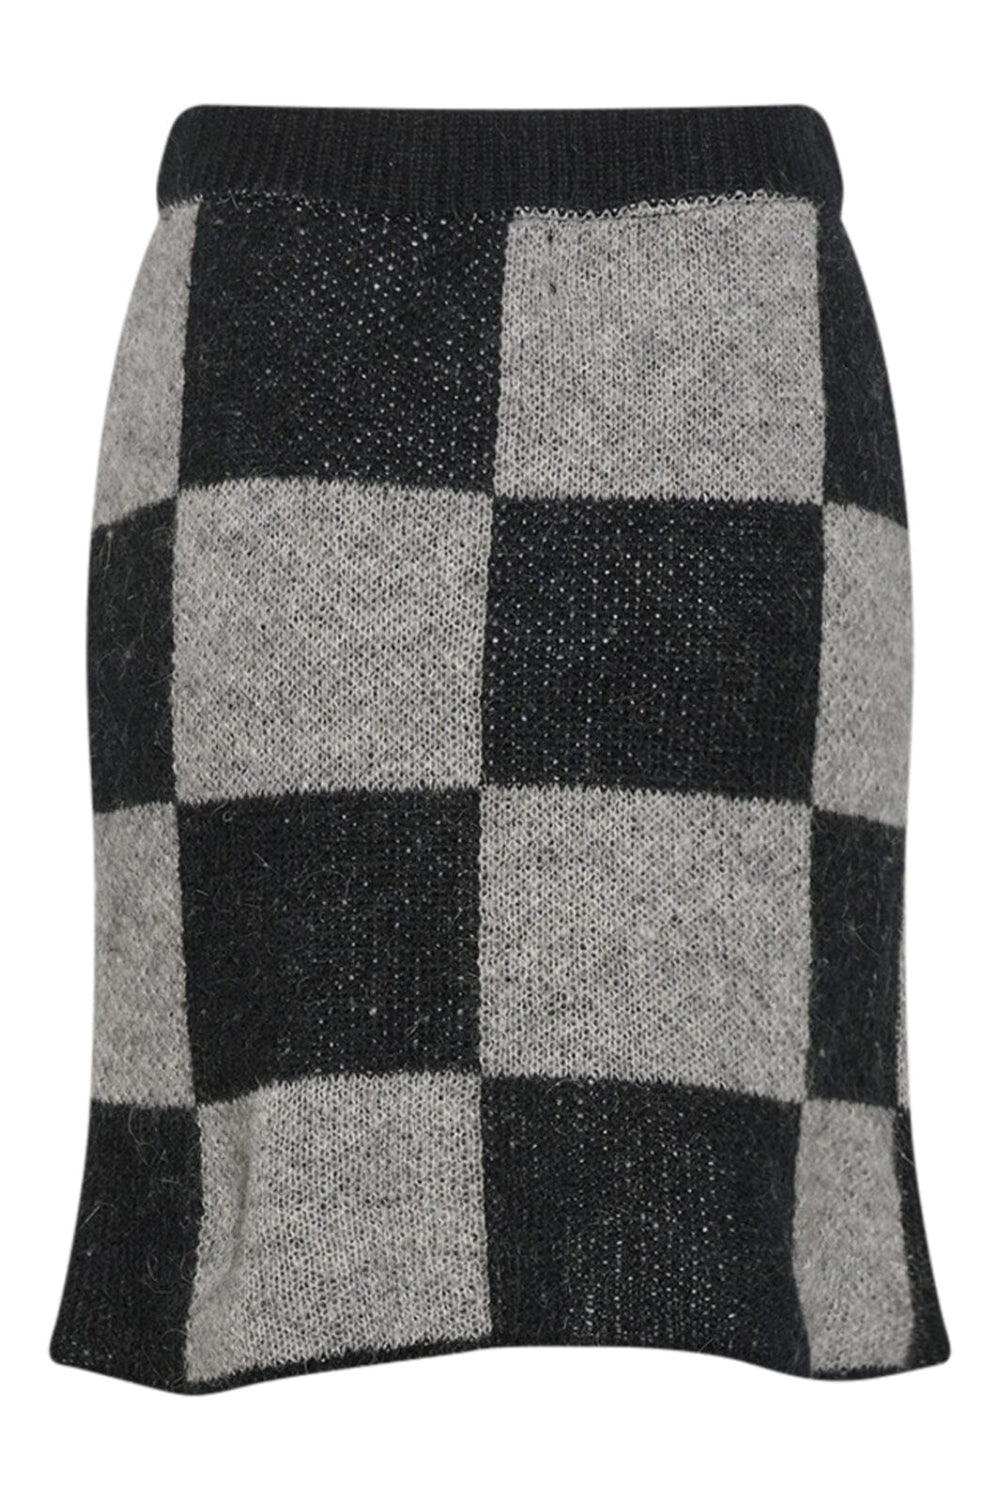 Noella - Kiana Knit Skirt - 926 Black/Grey Nederdele 